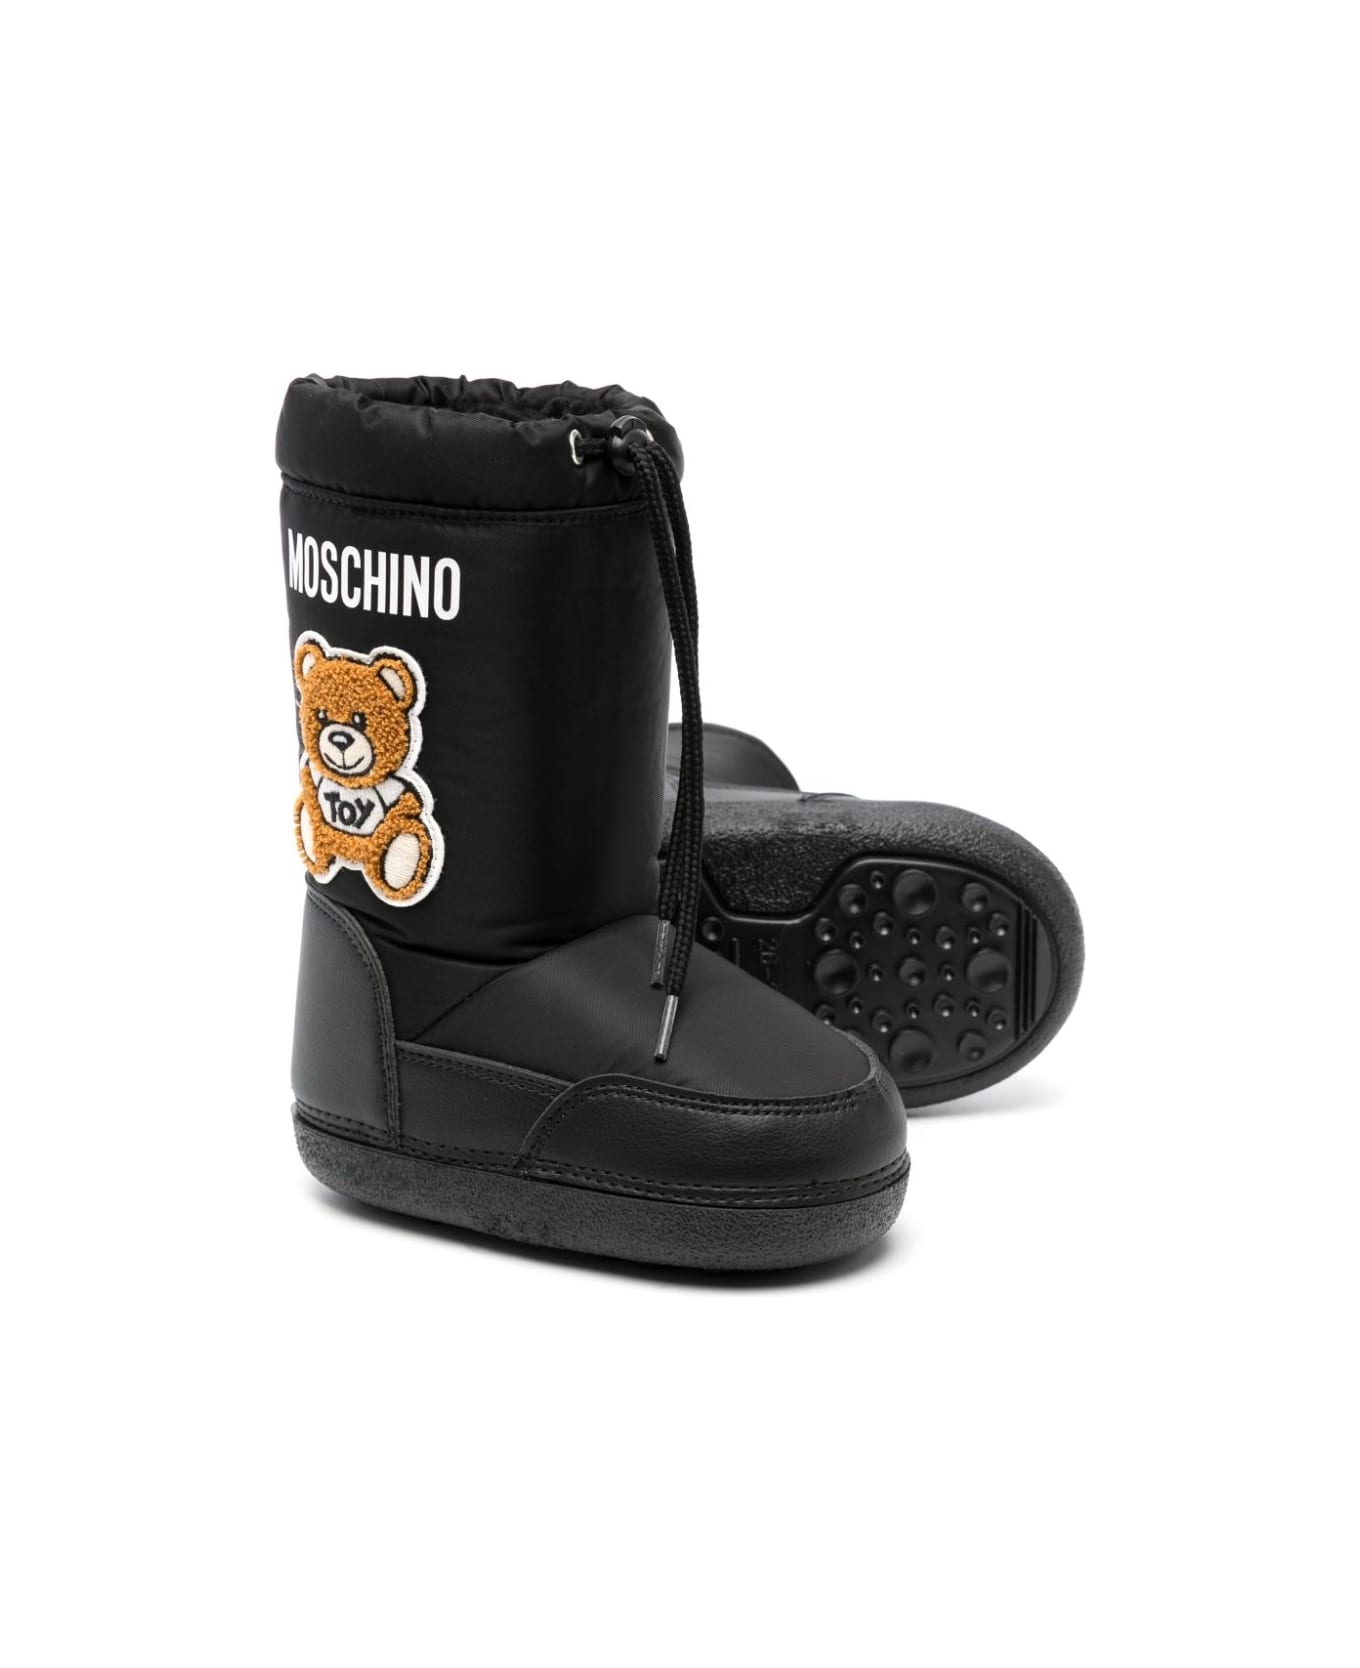 Moschino Teddy Bear Patch Snow Boots - Black シューズ